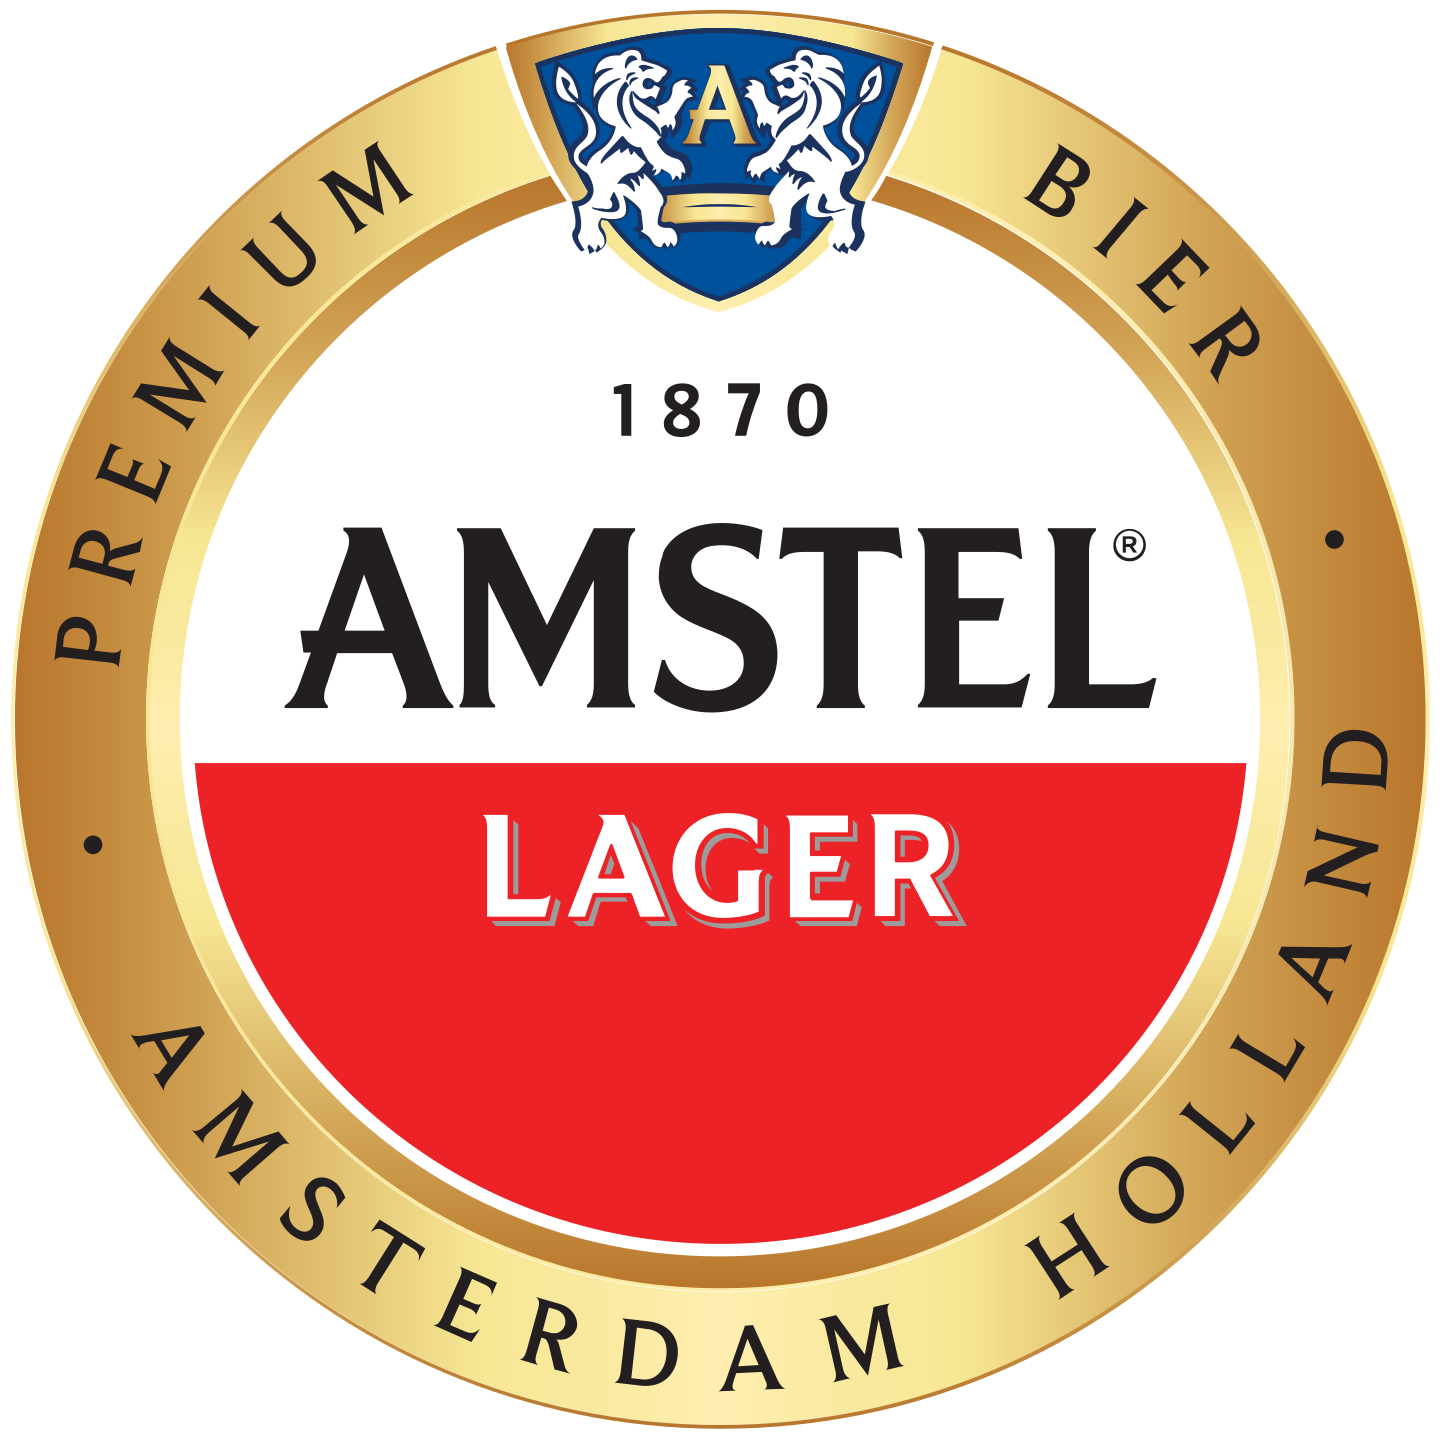 amstel logo 2 - Amstel Logo